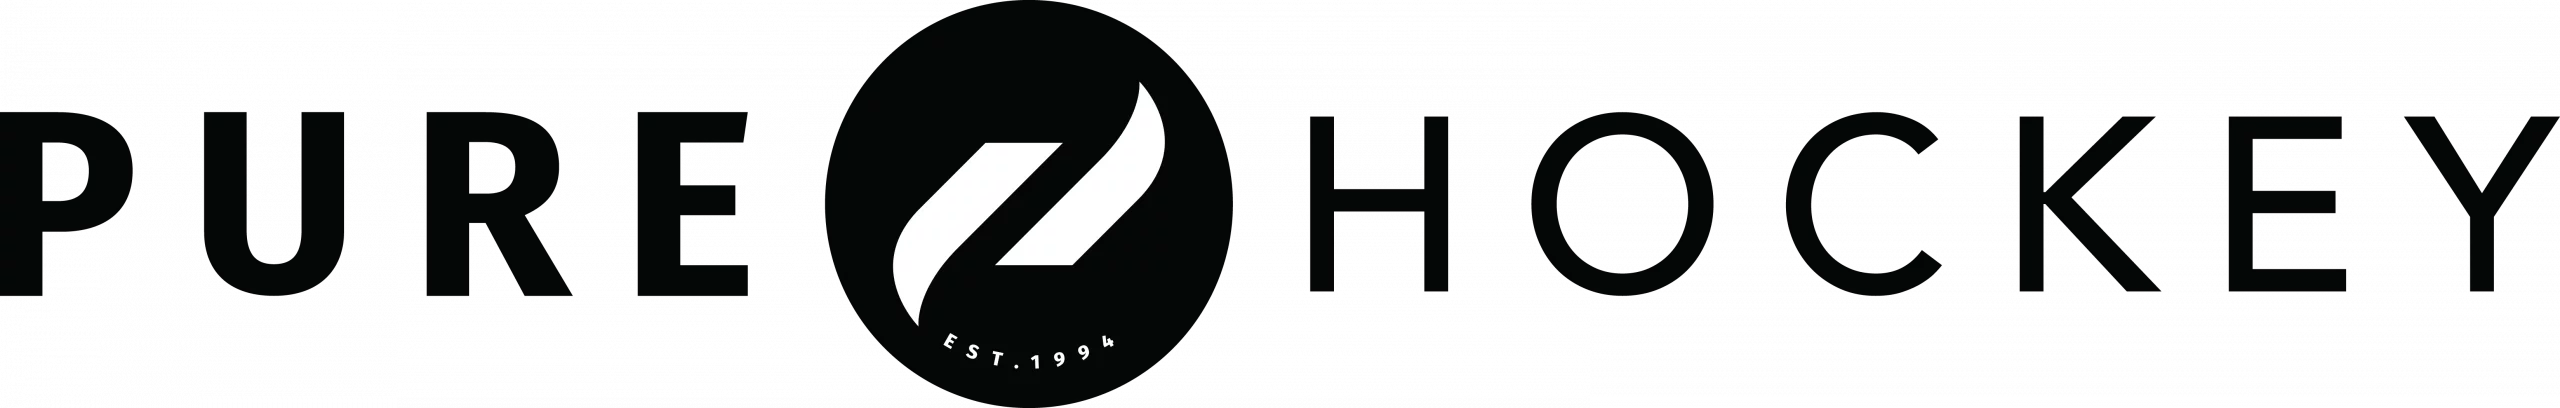 PH-Logo-4-BW